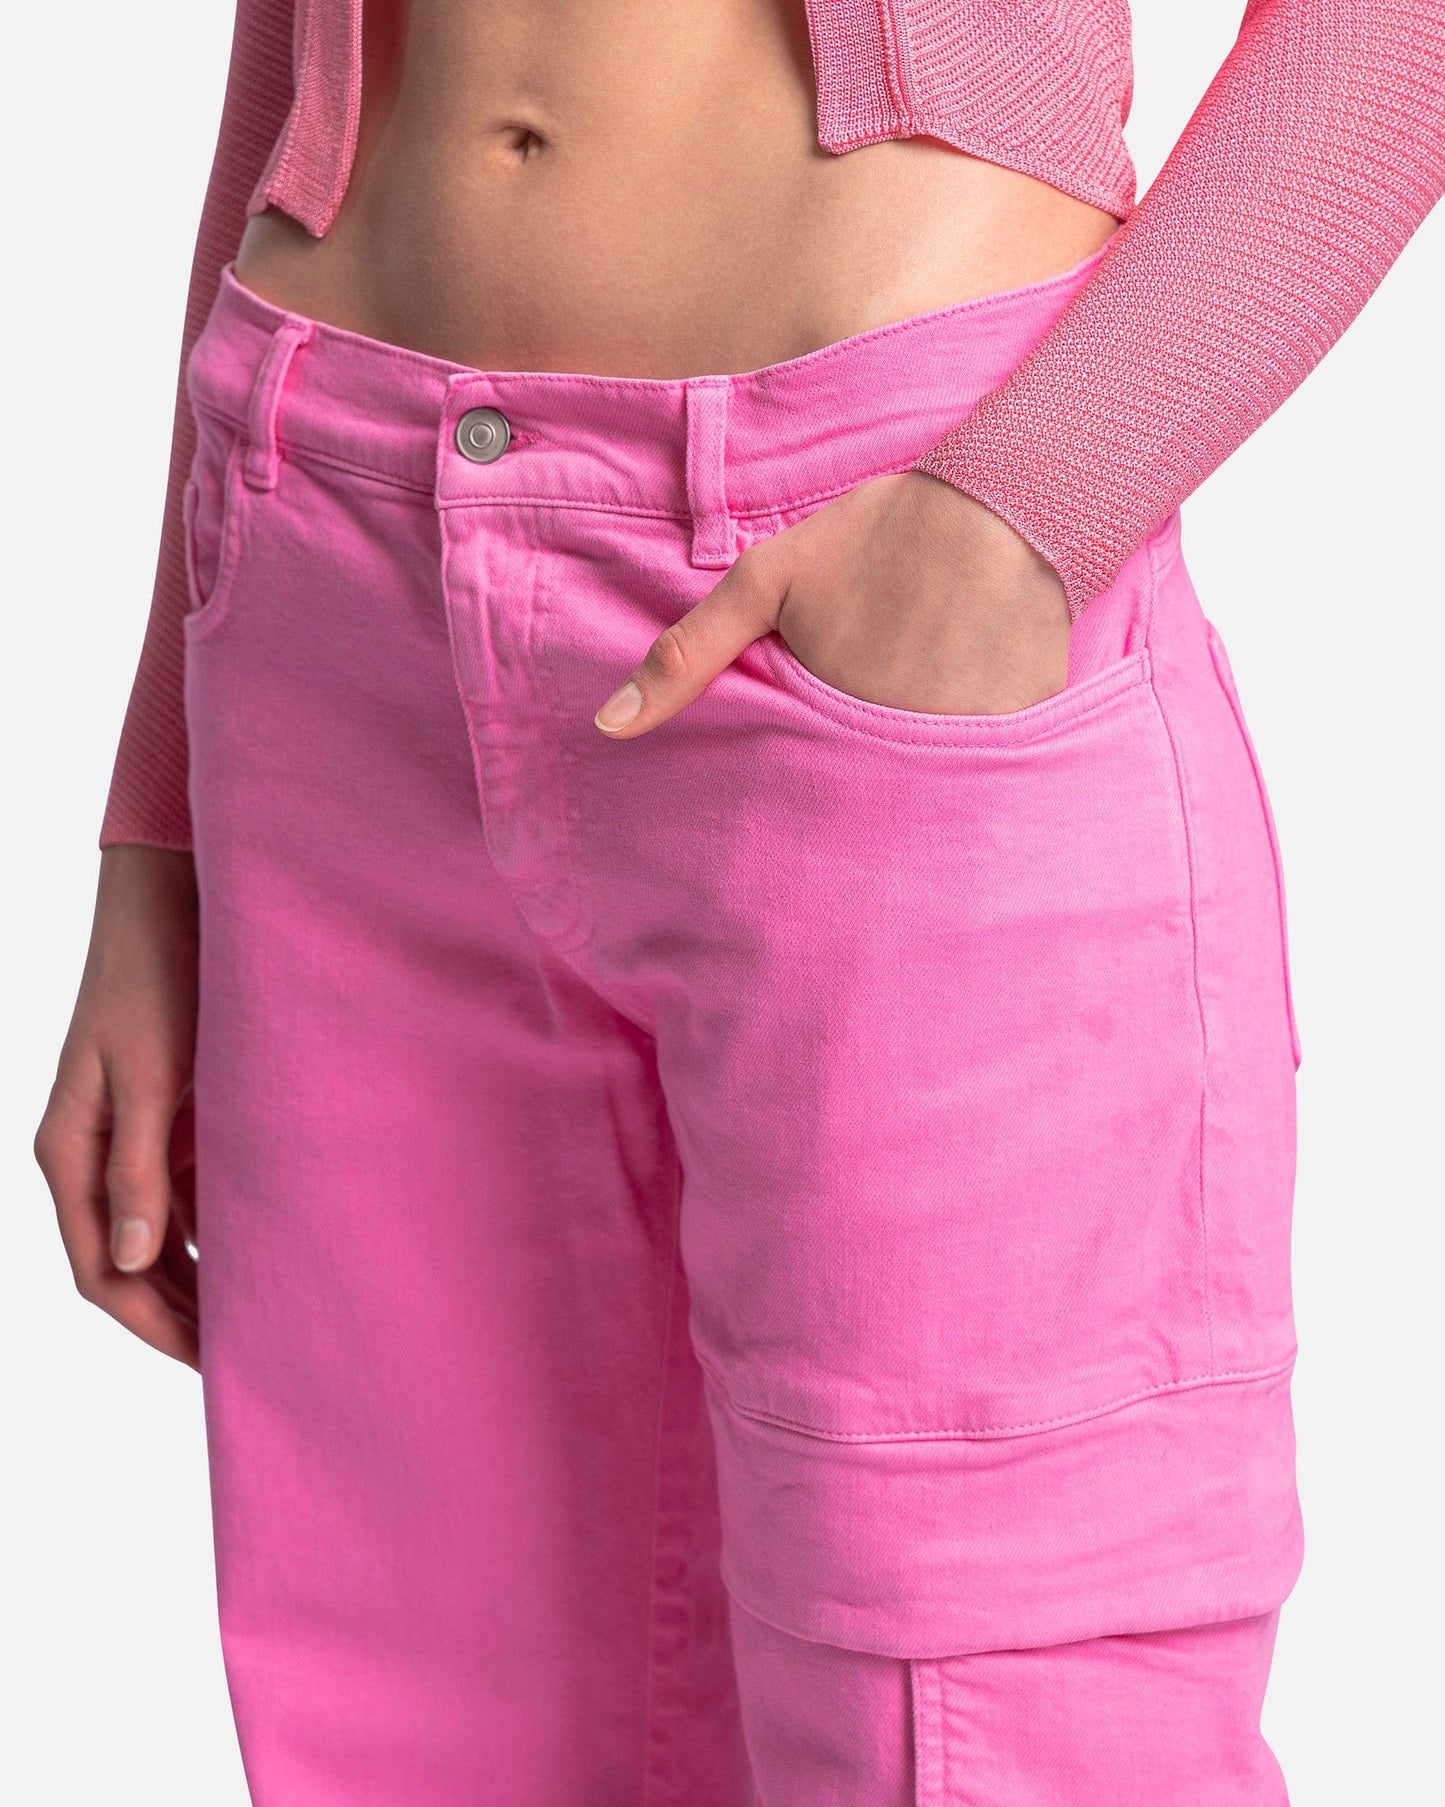 1017 ALYX 9SM Men's Pants Women's Oversized Cargo Jeans in Pink